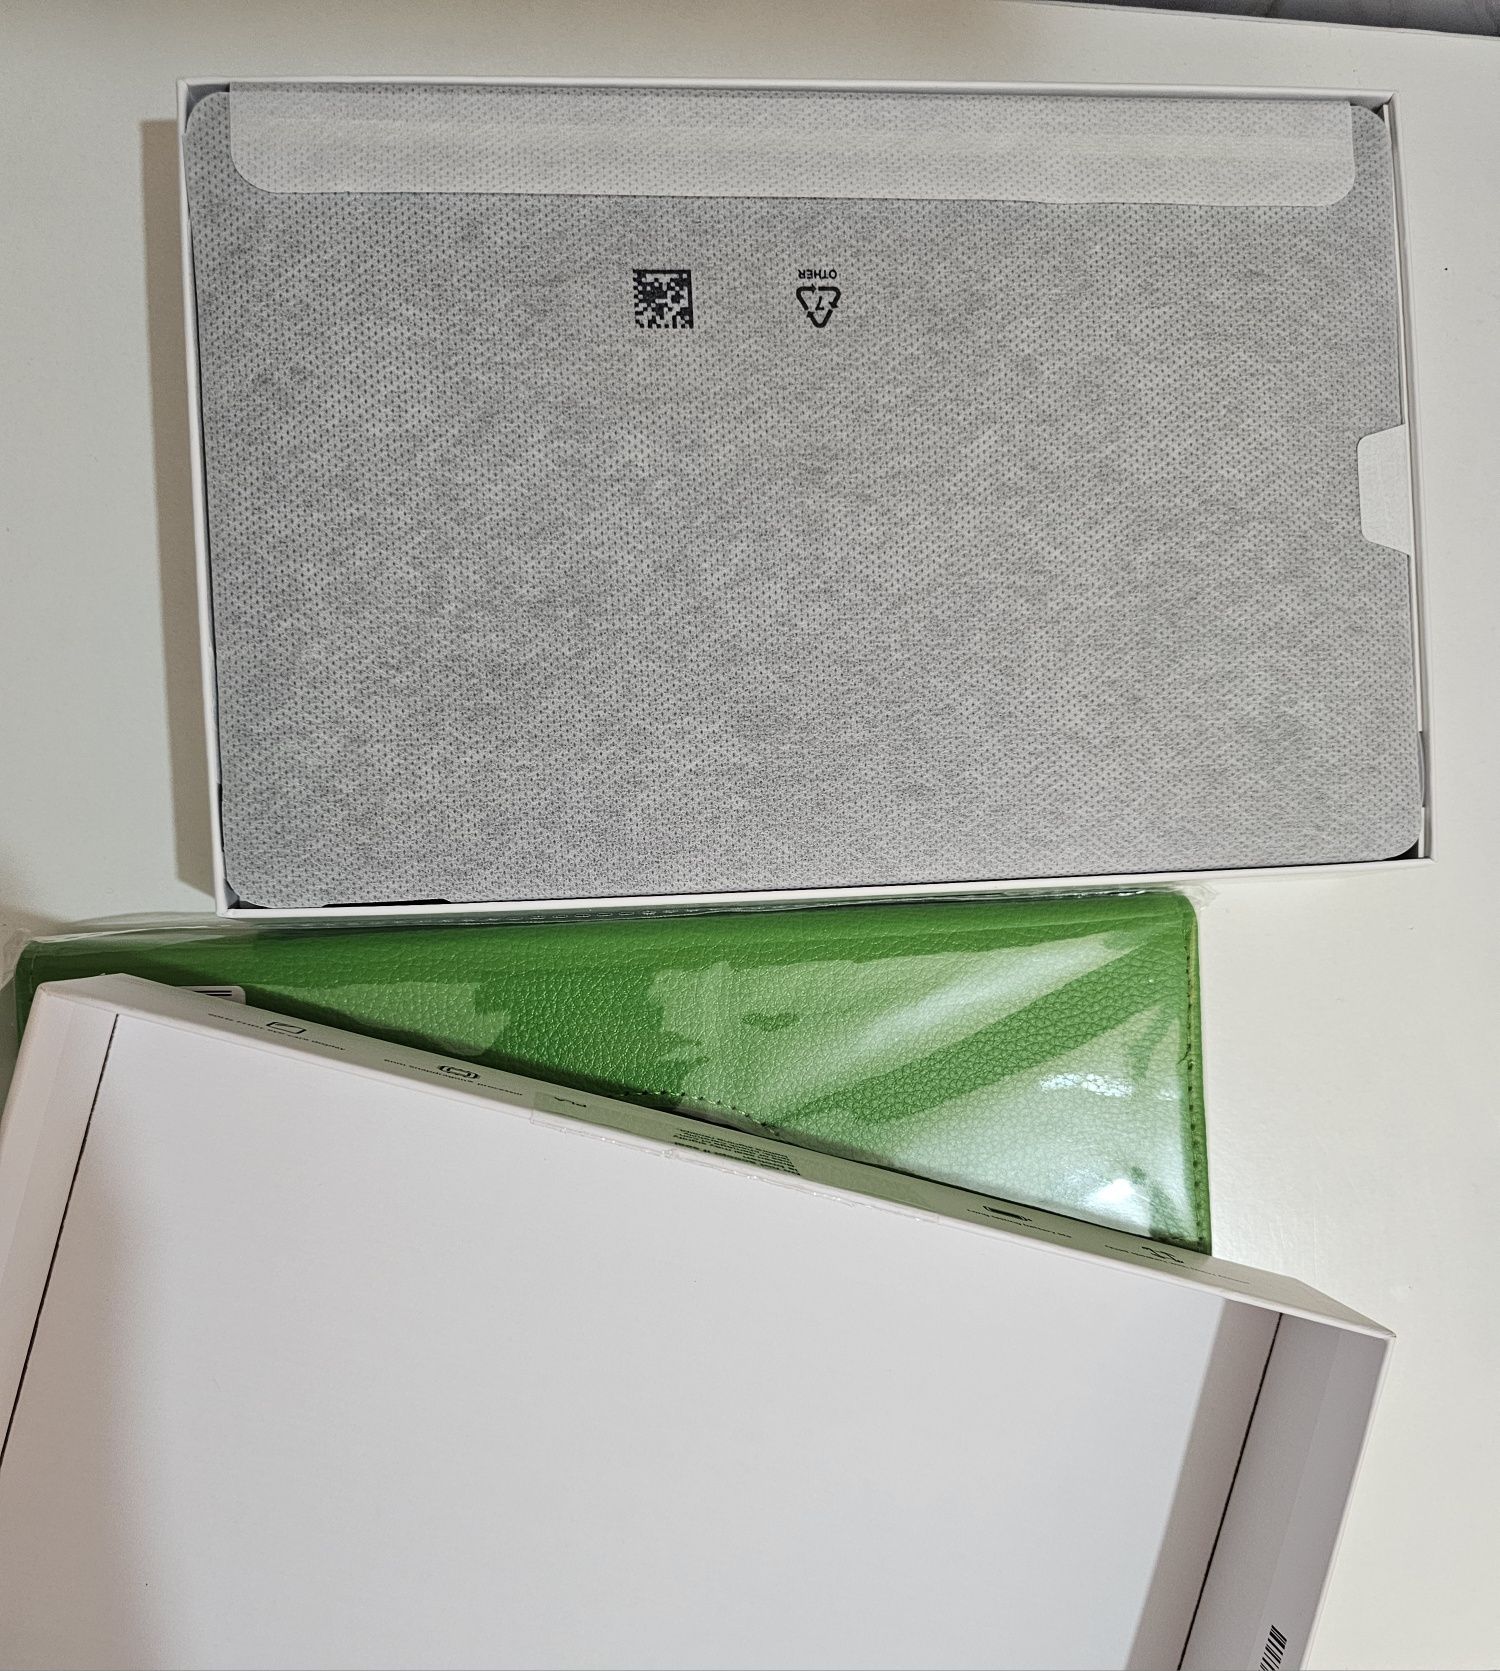 Tablet Redmi Pad SE 11 90hz